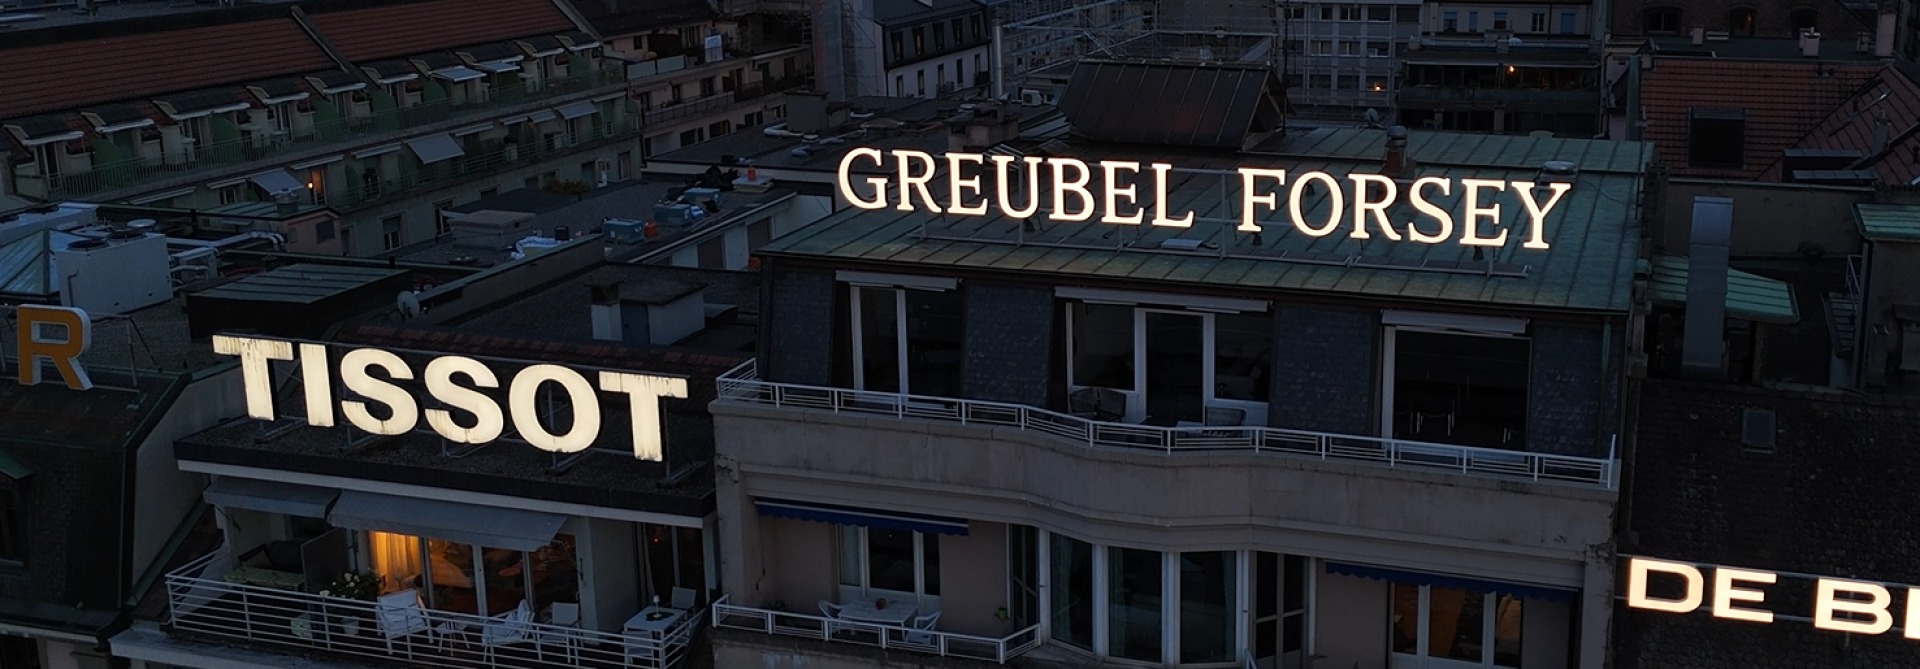 The GREUBEL FORSEY sign <br> in Geneva